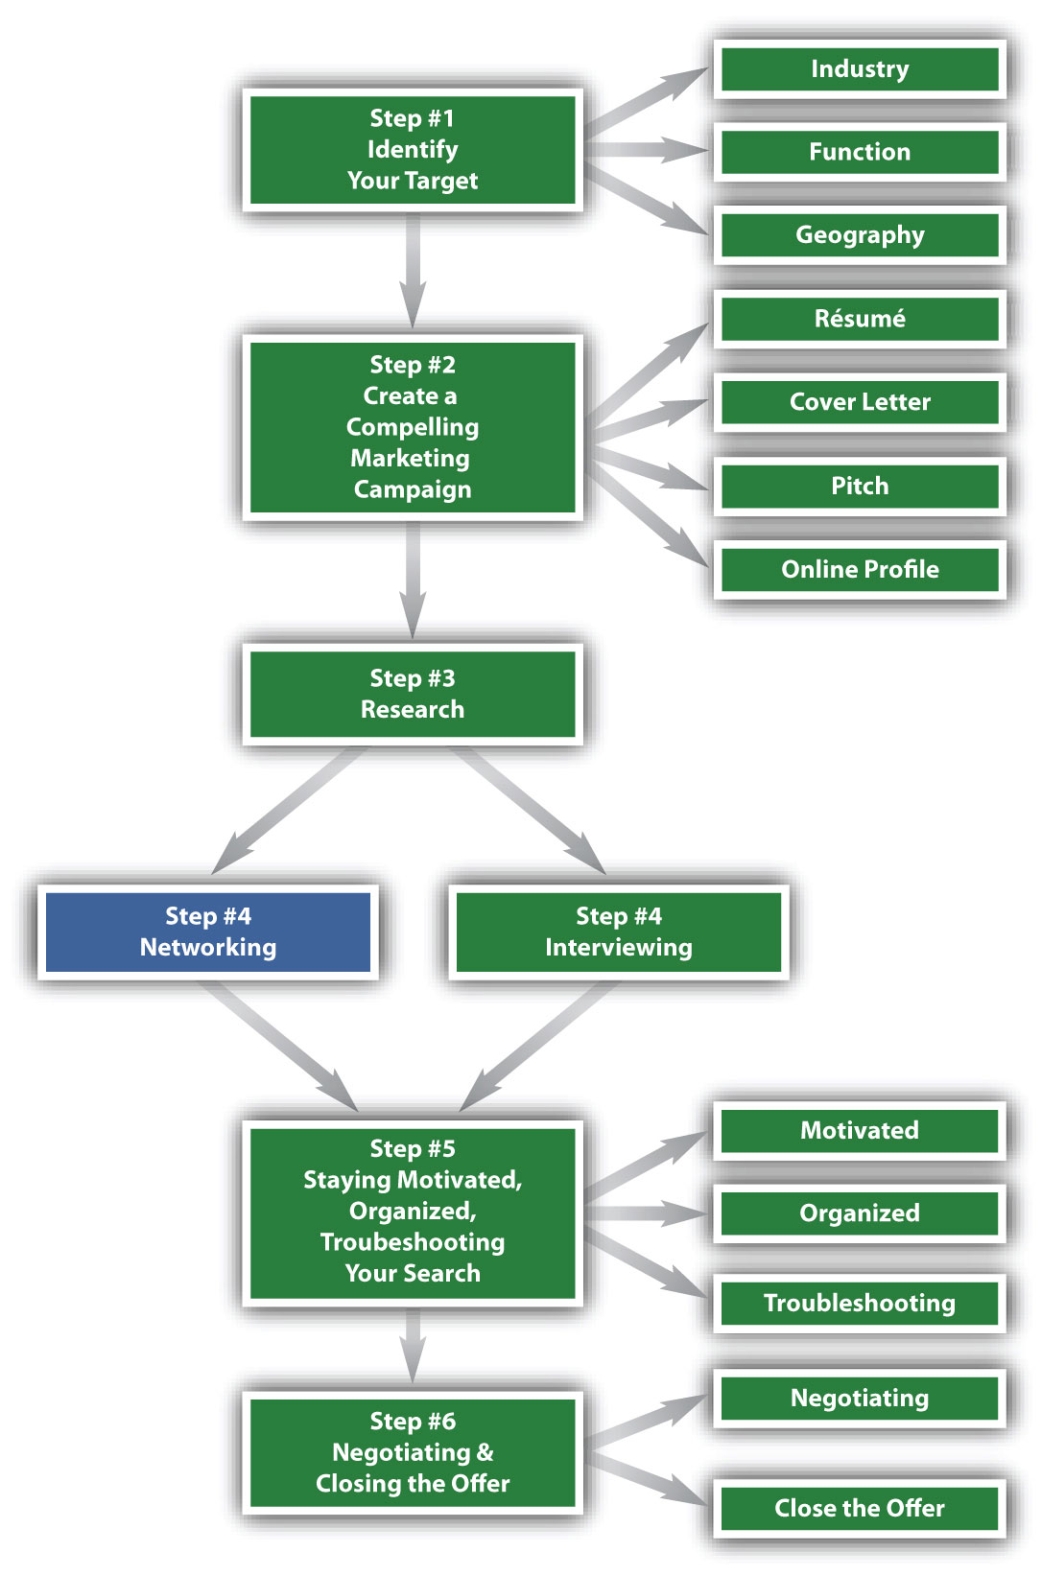 An Analytical Network Process of an effective relationship between